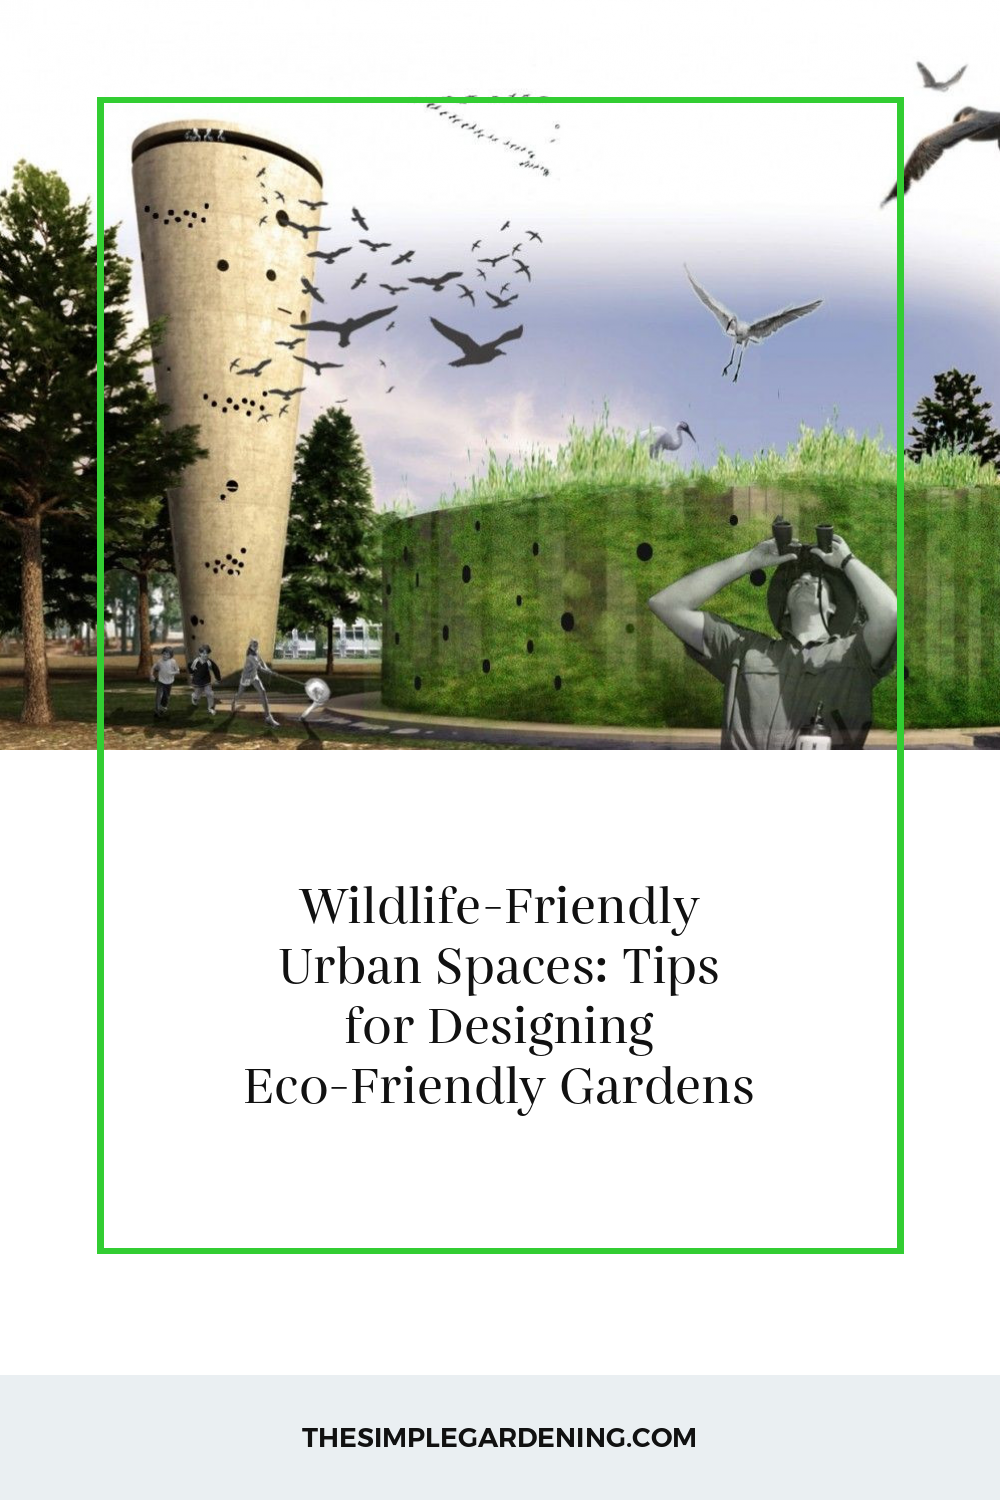 Wildlife-Friendly Urban Spaces: Tips for Designing Eco-Friendly Gardens